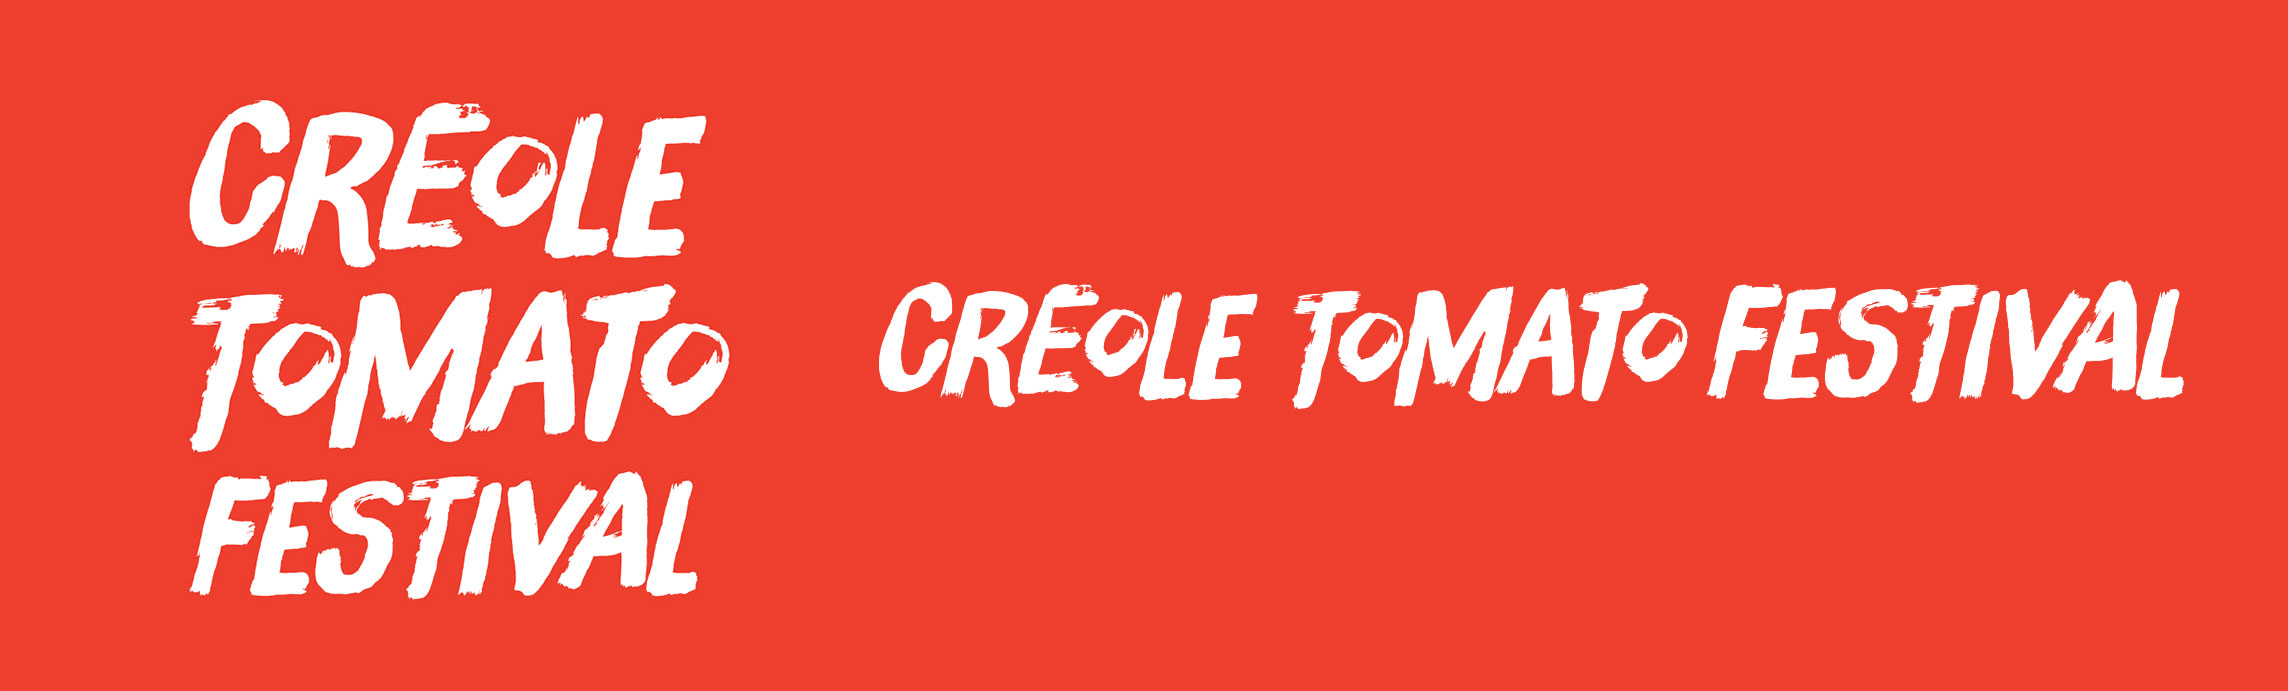 Creole Tomato Festival Logo